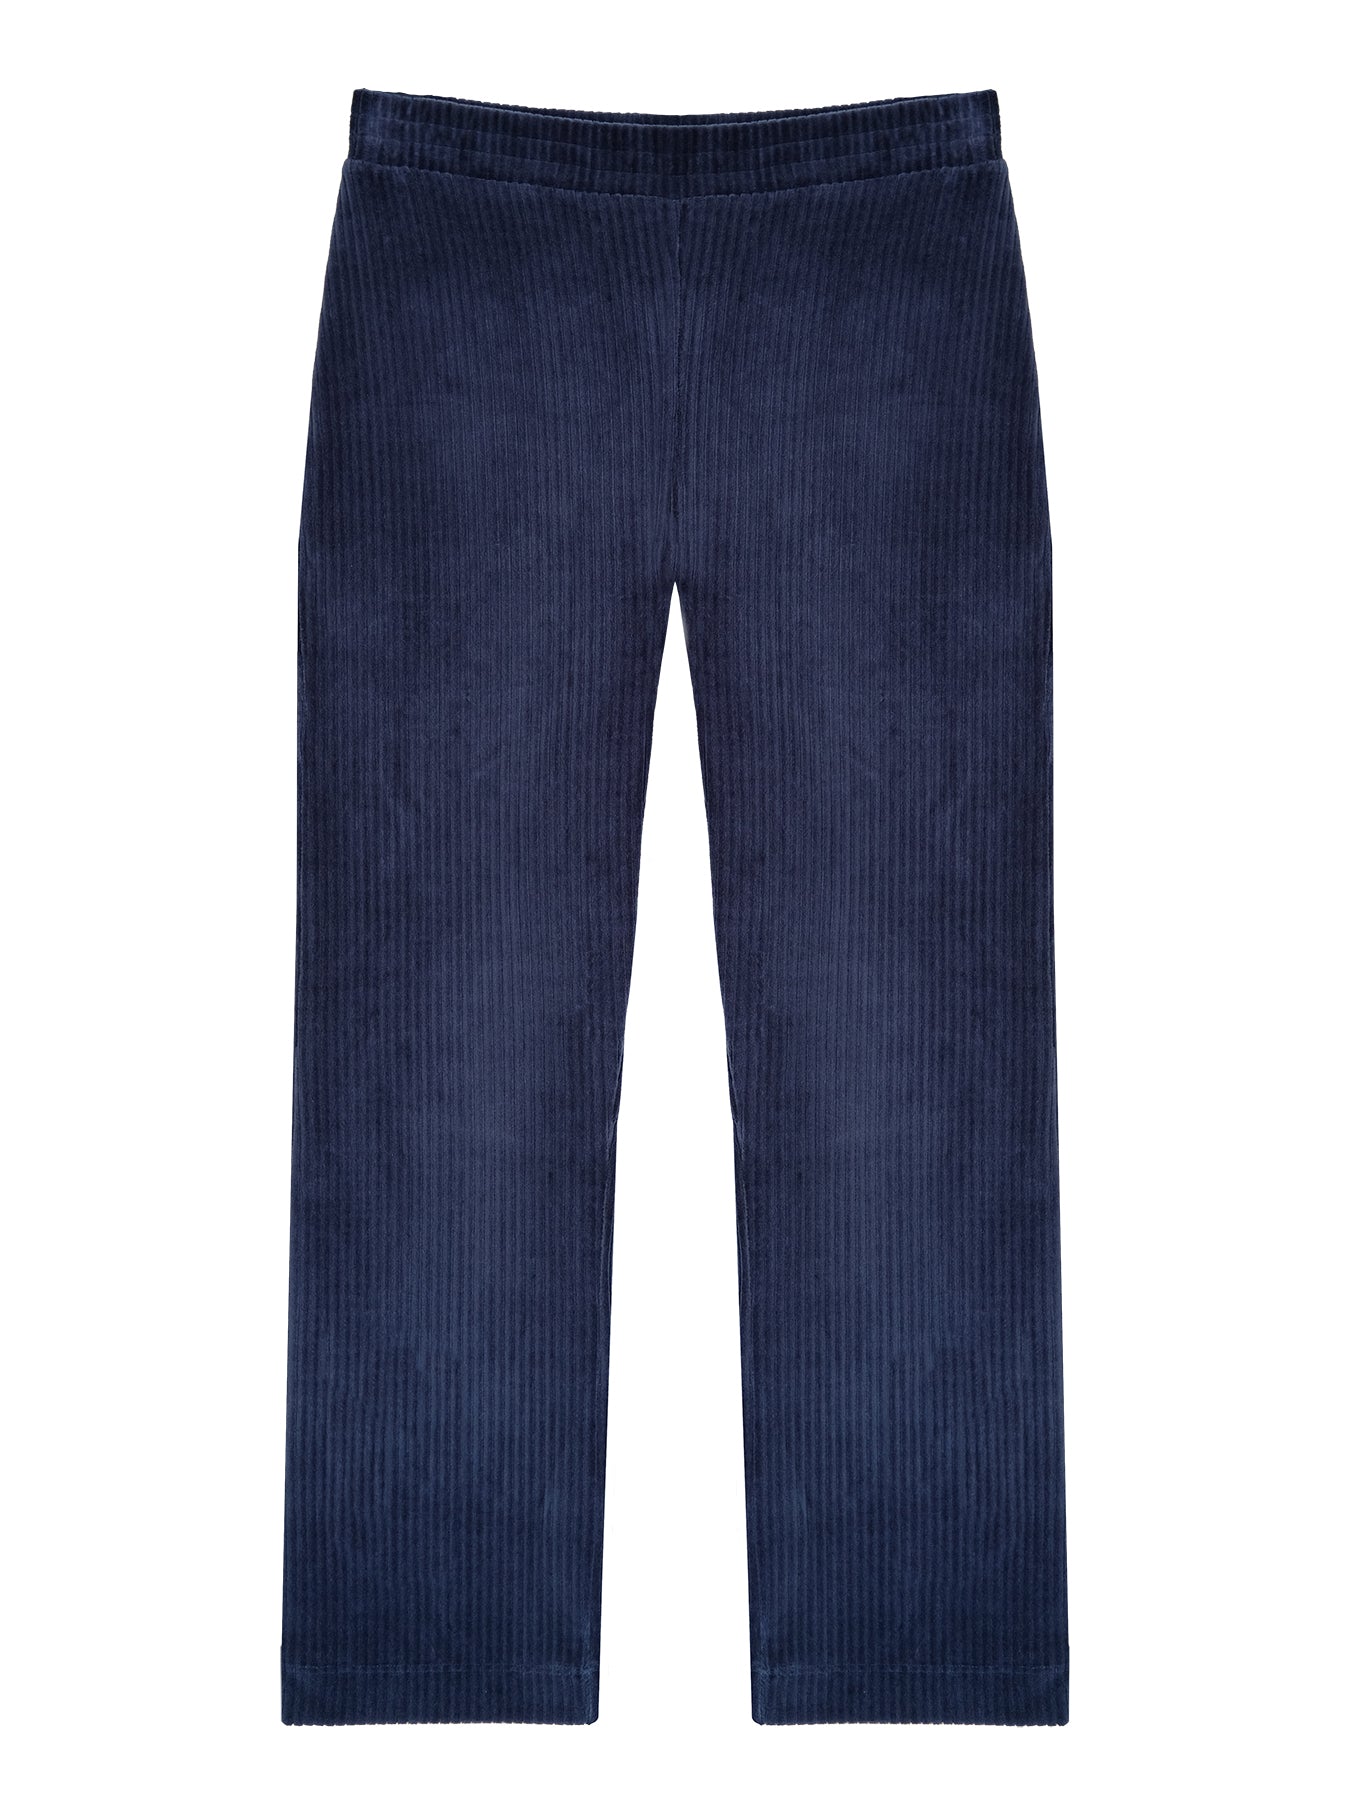 Mariano Rubinacci - Night blue corduroy trousers